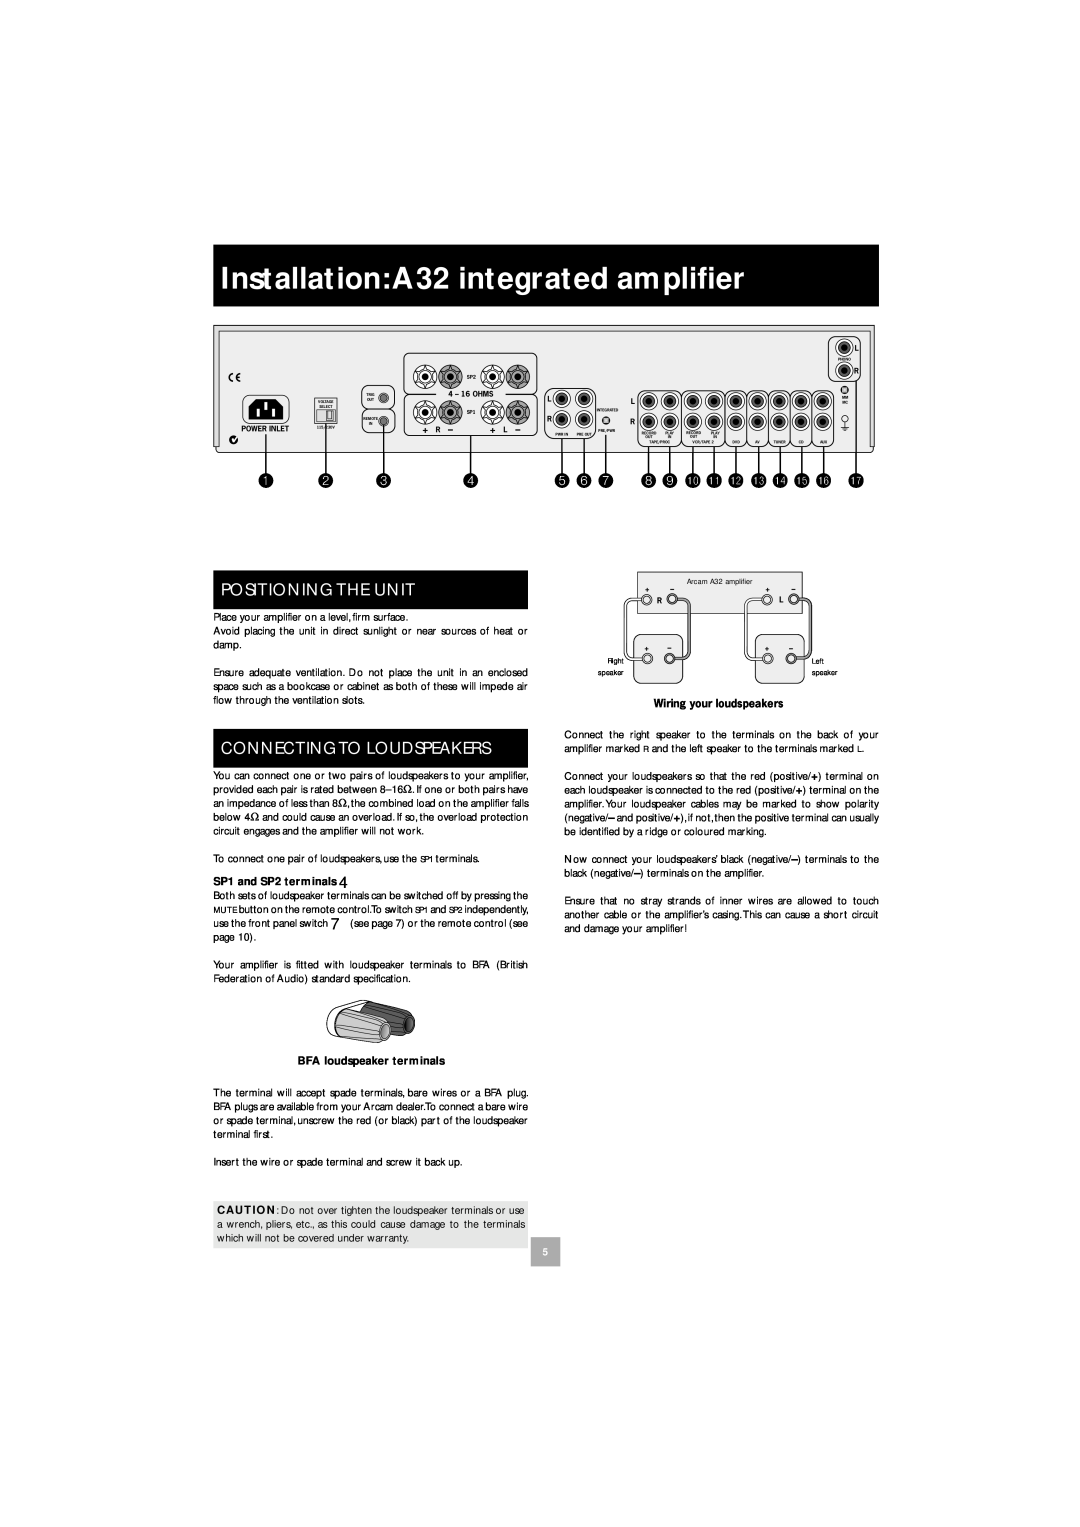 Arcam P35 manual Installation A32 integrated ampliﬁer, 5 6 7 8 9 bk bl bm bn bo bp bq br, Positioning The Unit 